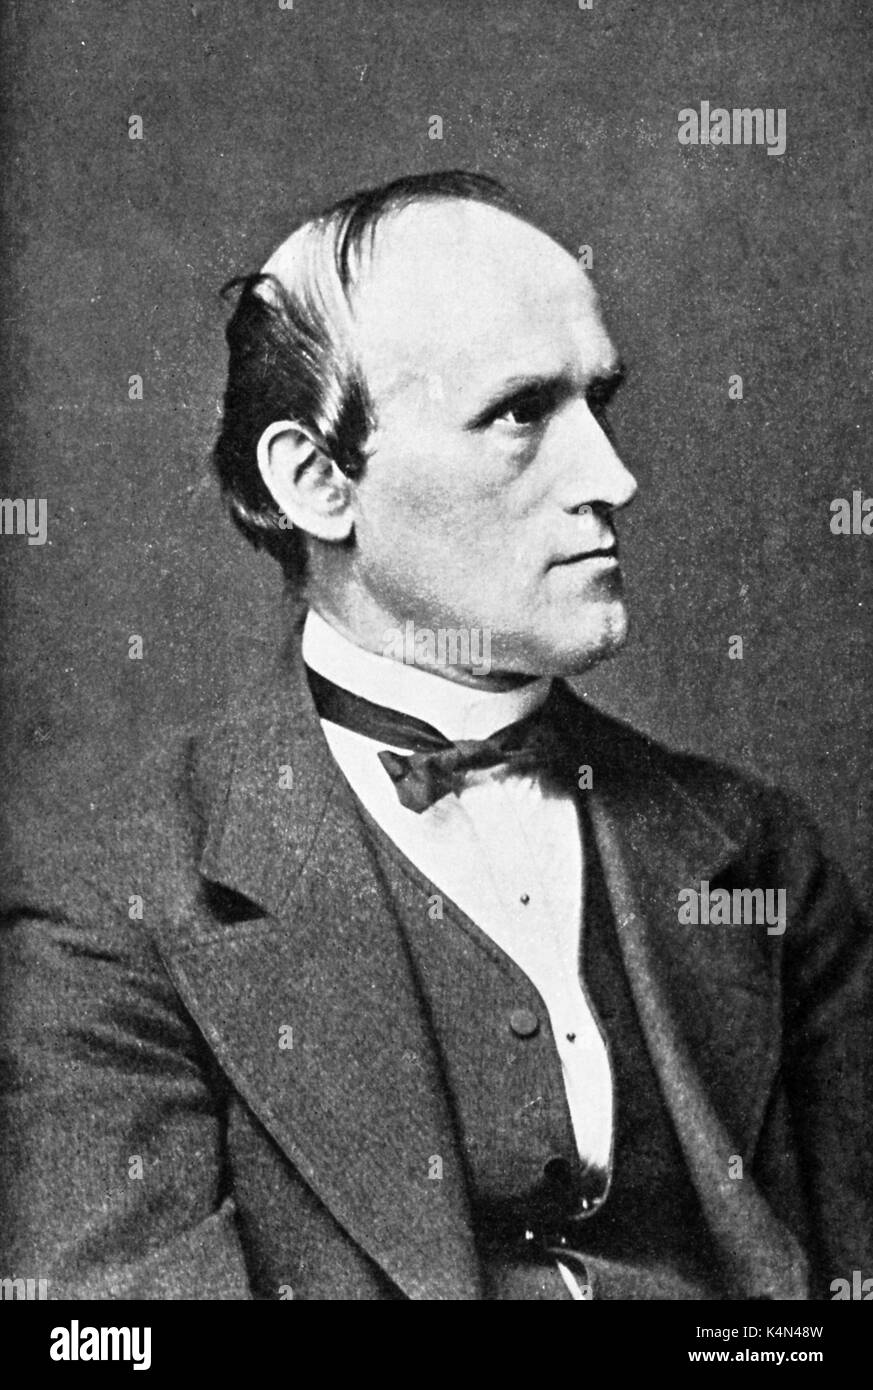 KIEL, Friedrich - portrait German music pedagogue and composer (1821-1885) Stock Photo